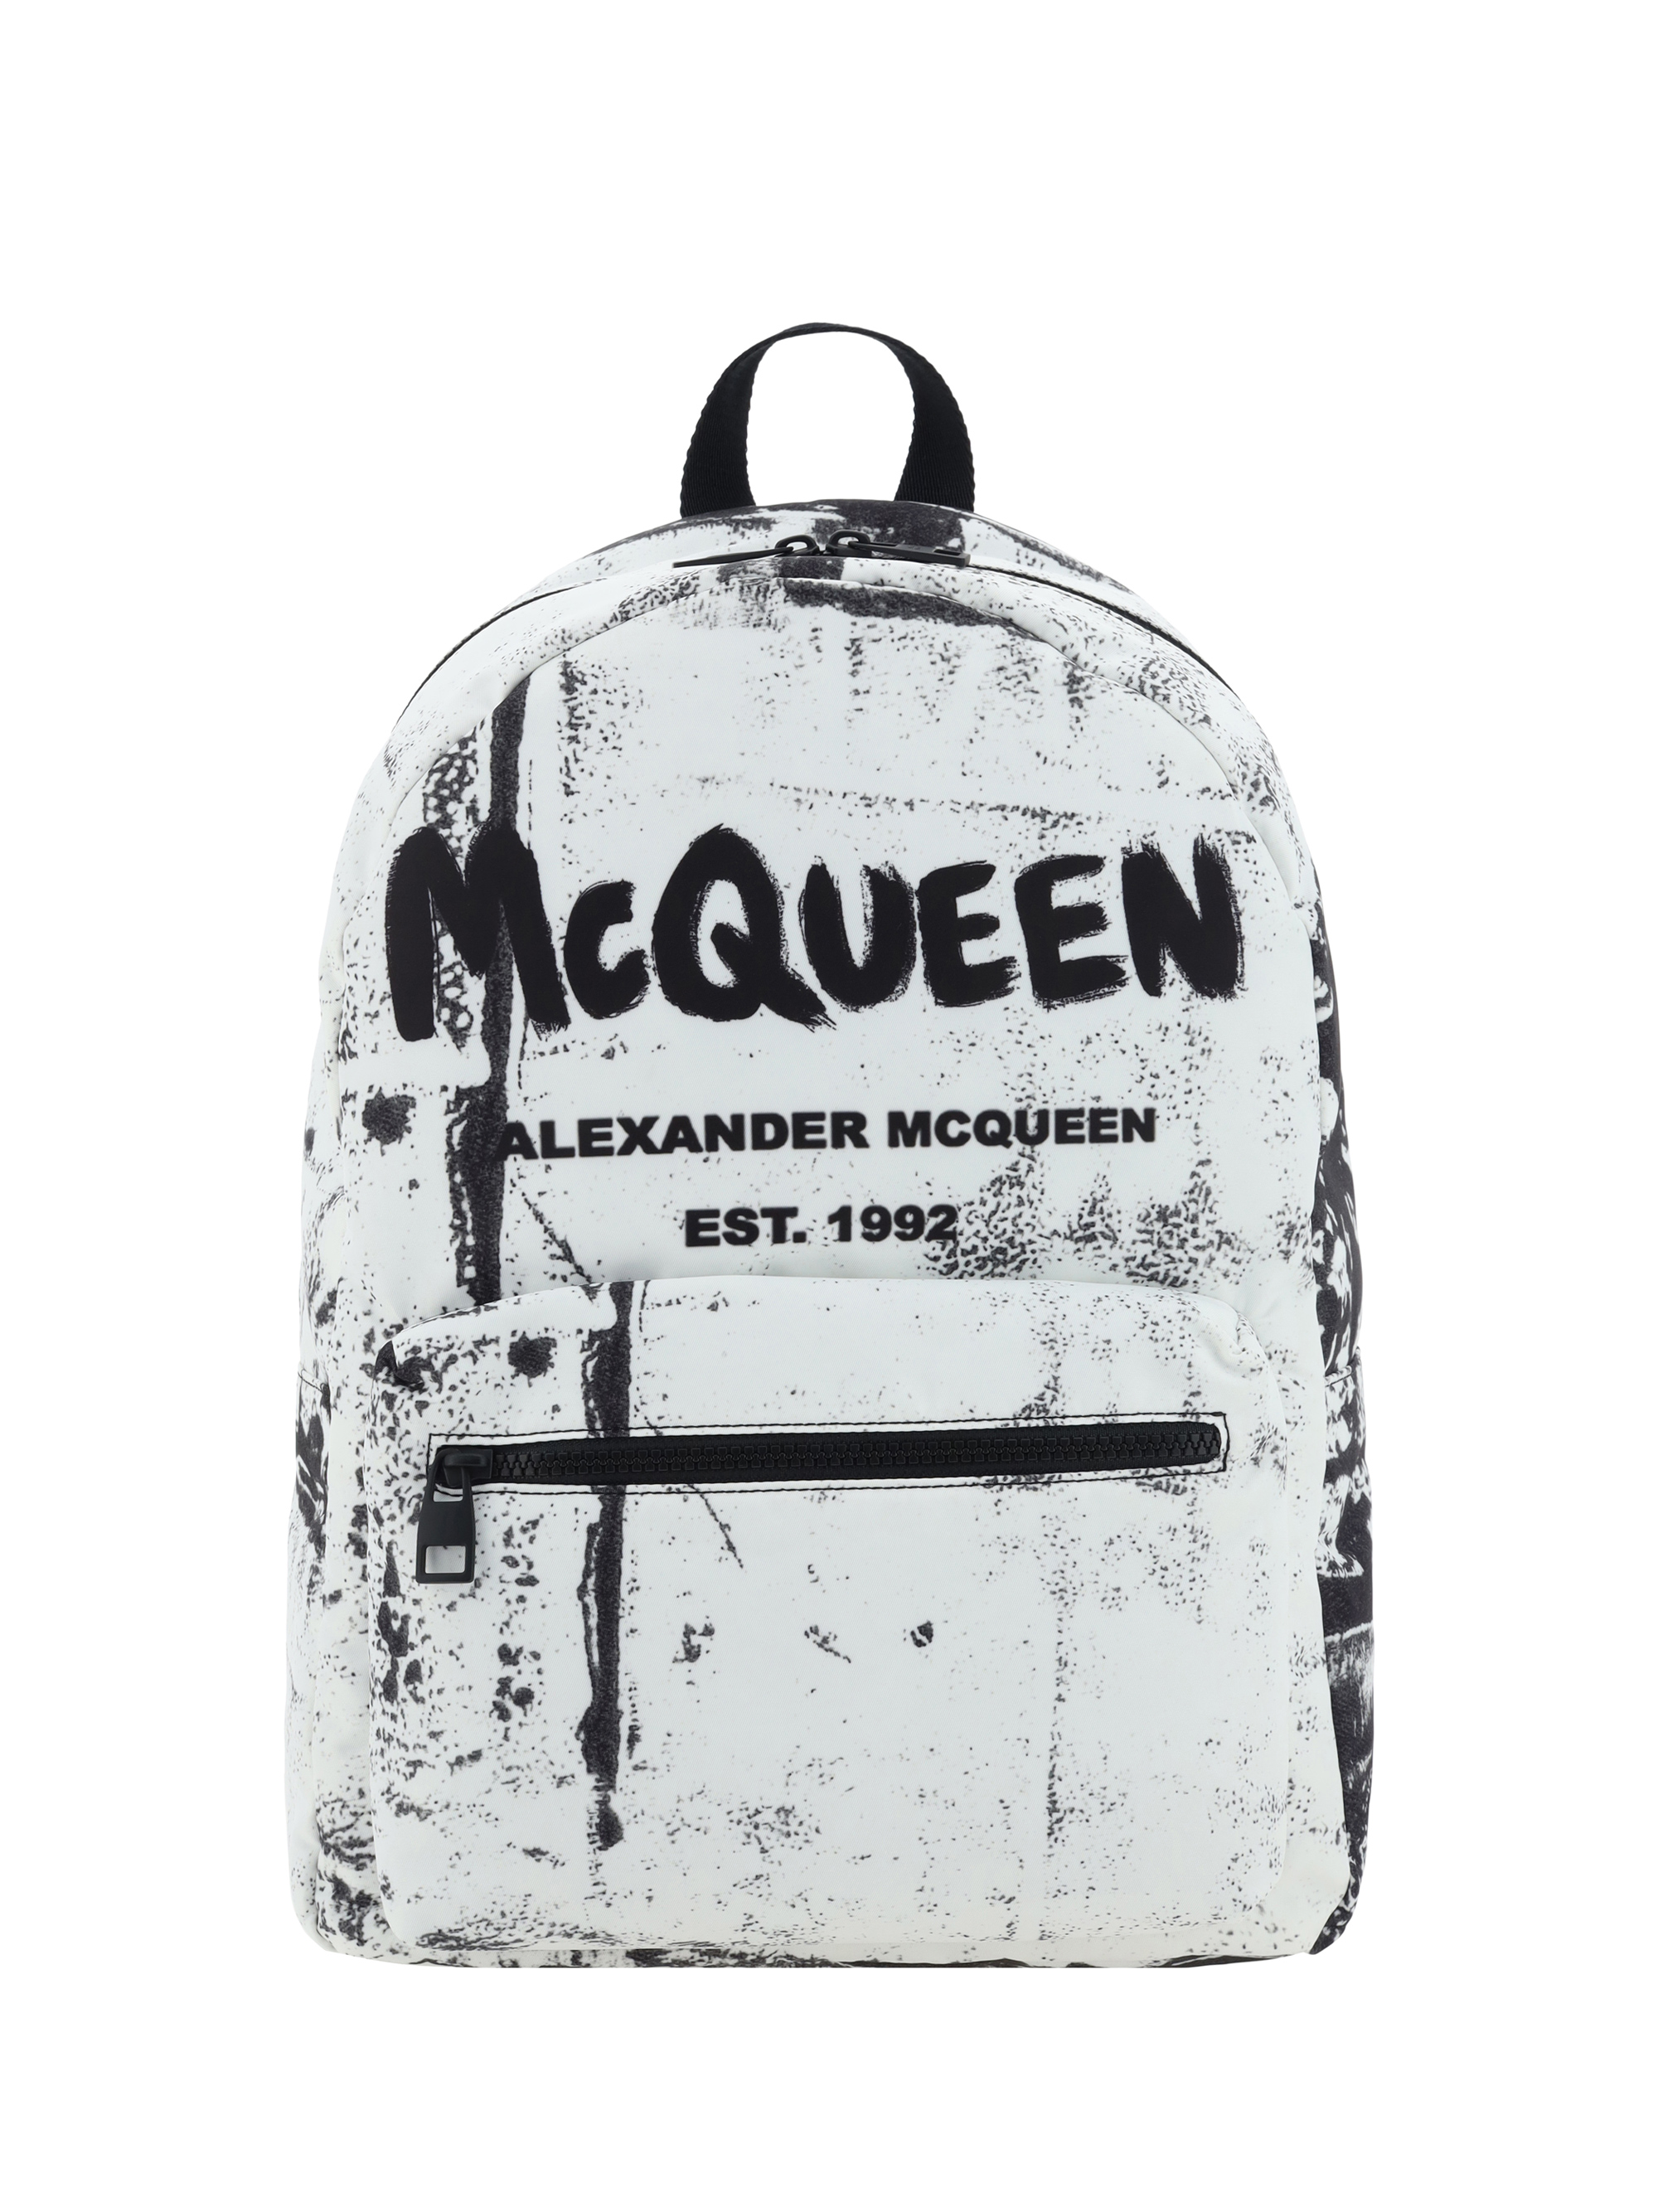 Alexander Mcqueen Metropolitan Backpack In Black/white